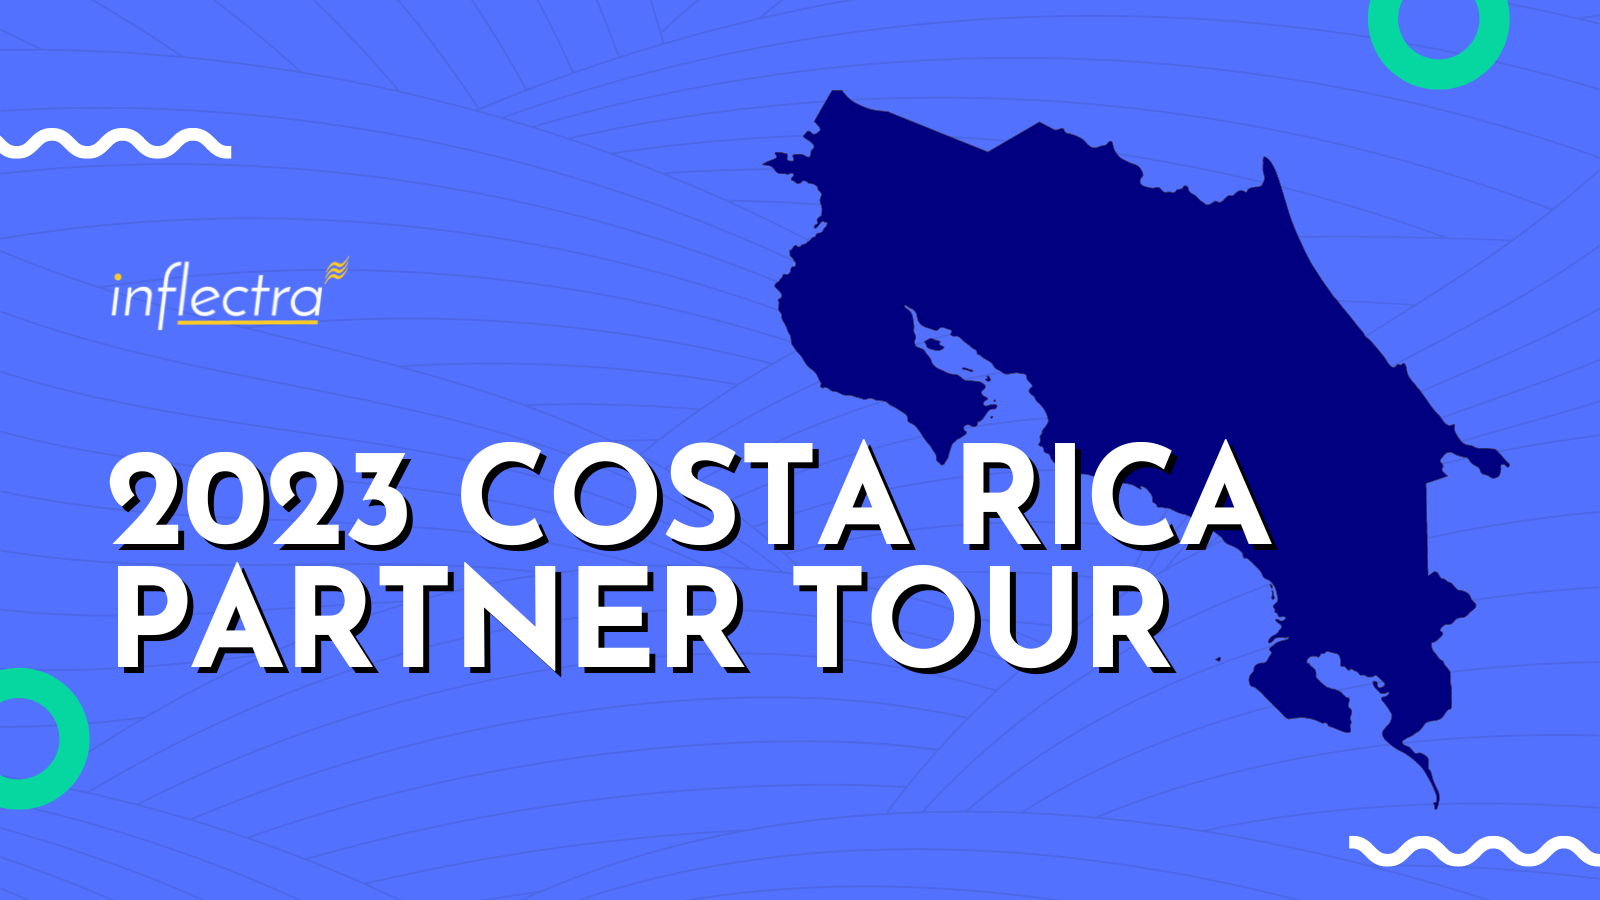 recap-blog-header-inflectra-2023-costa-rica-partner-tour-image